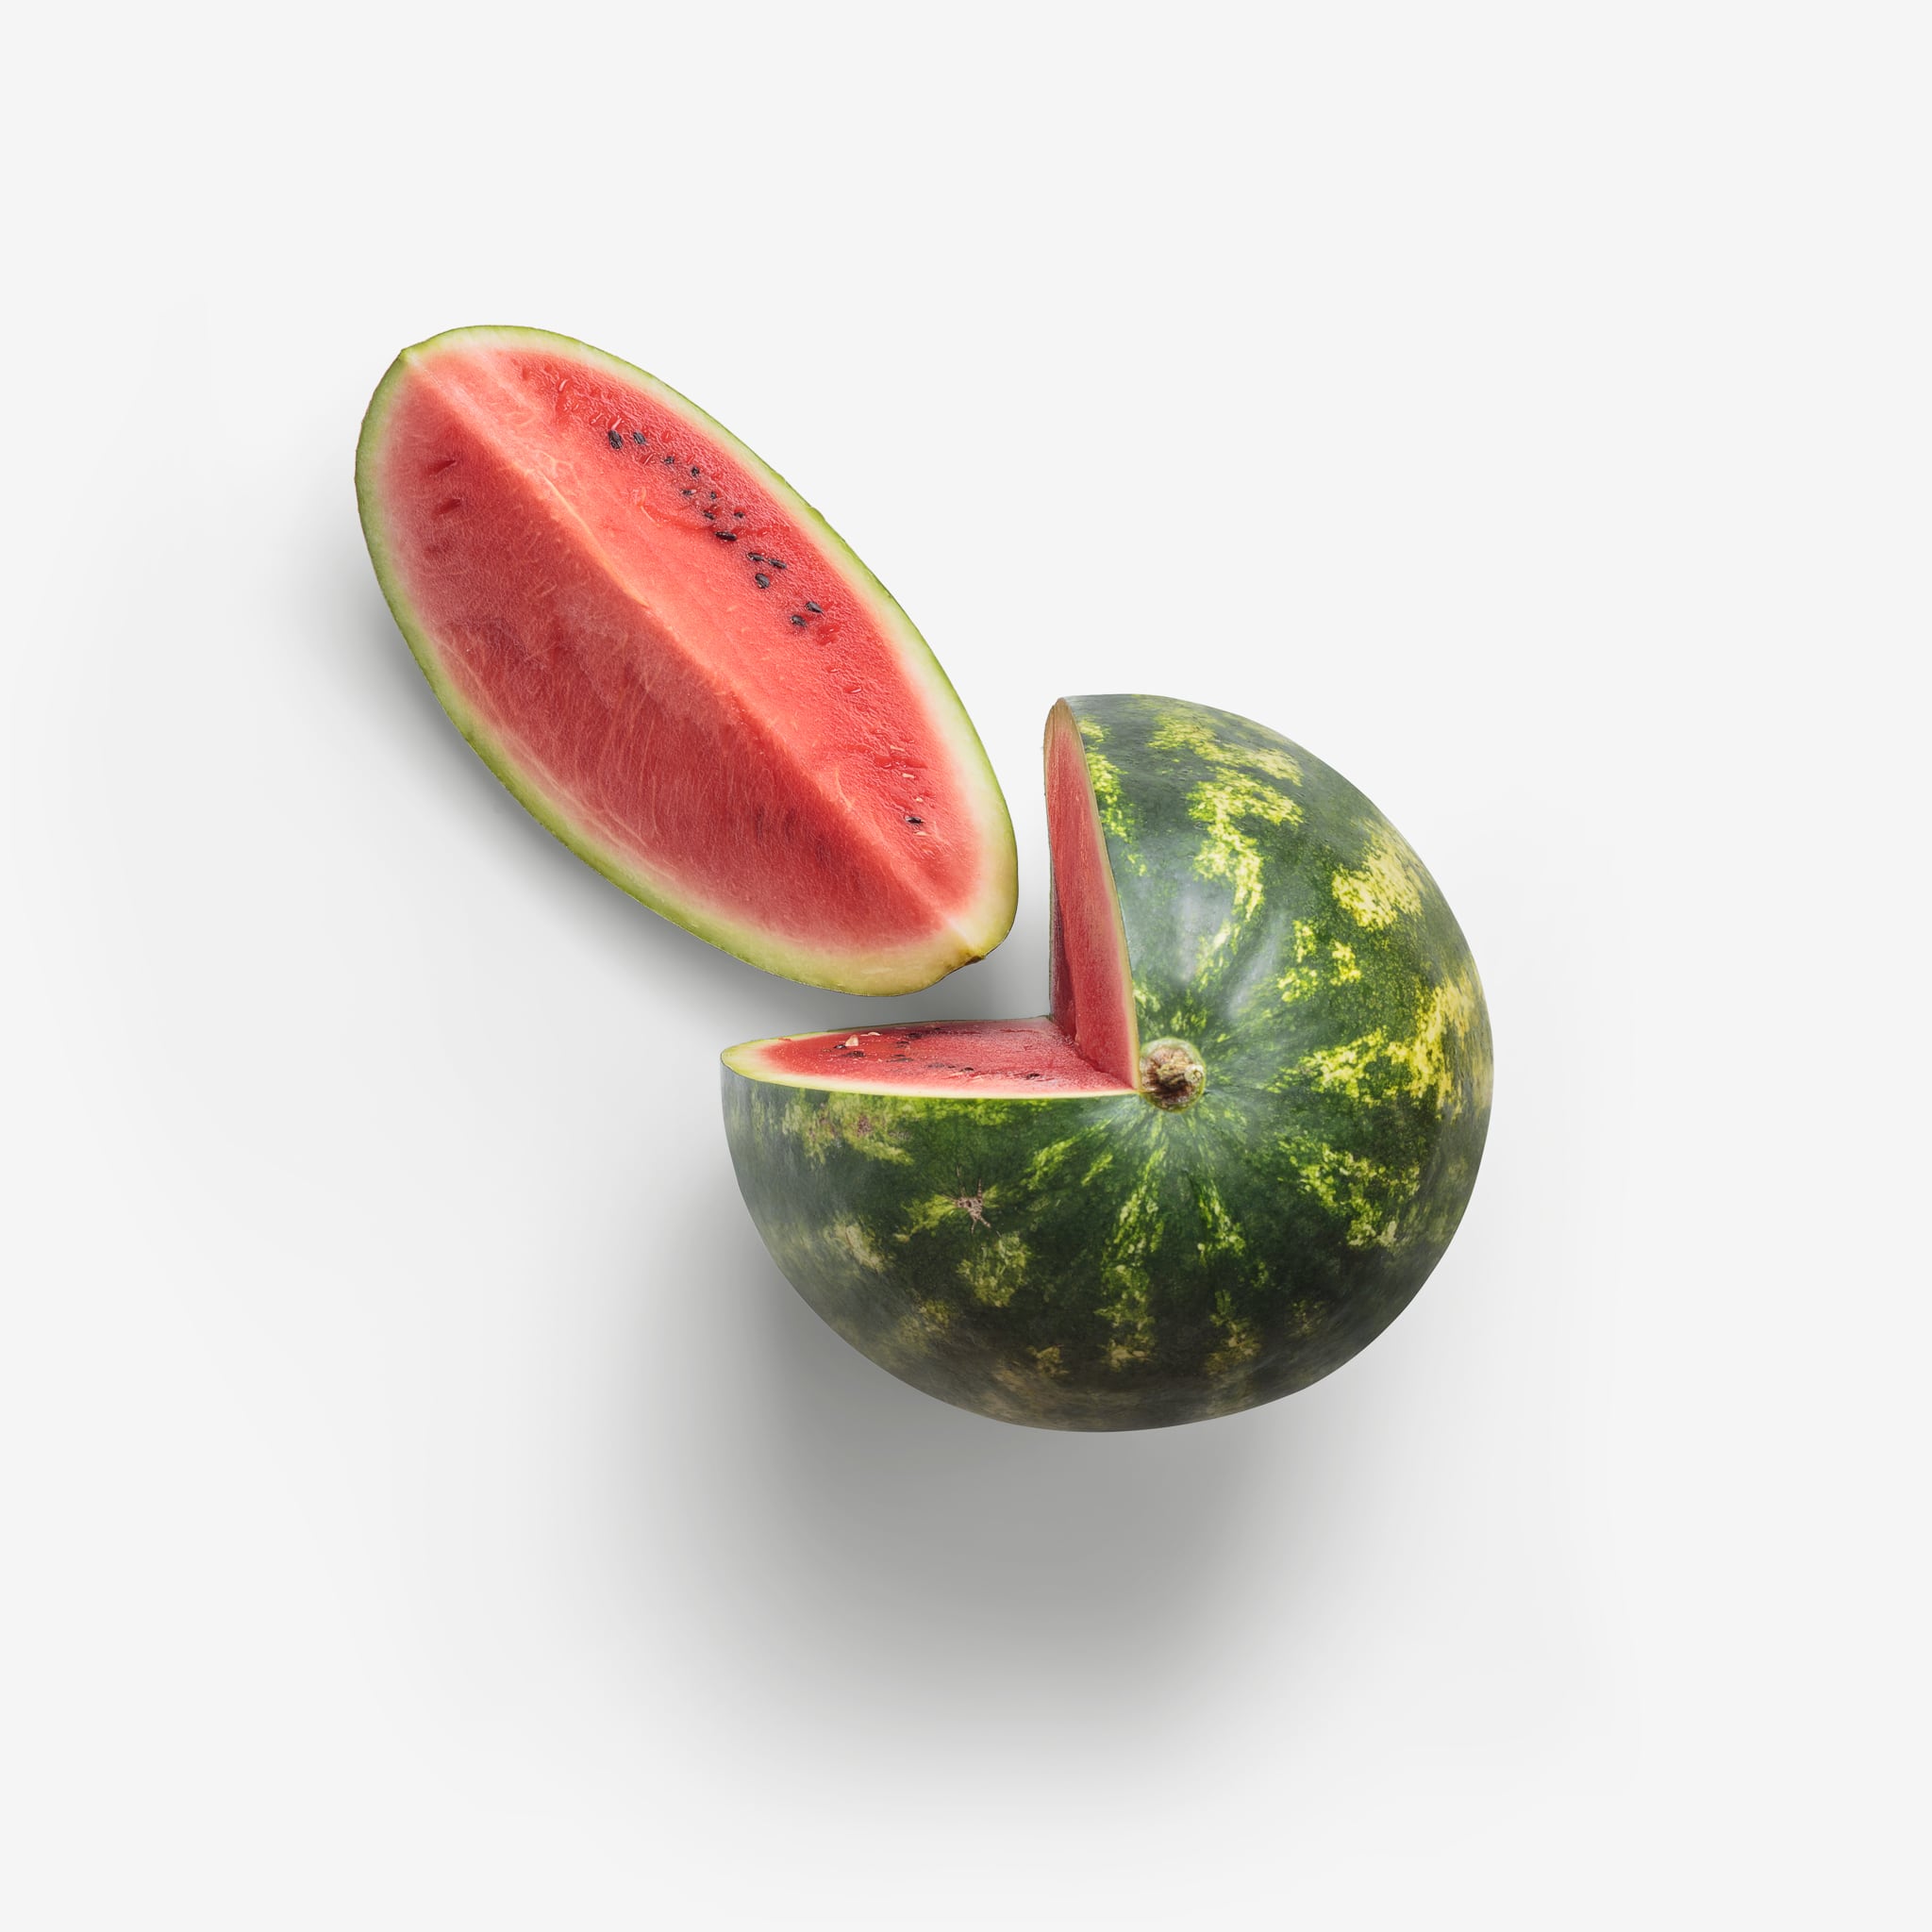 Watermelon PSD layered image